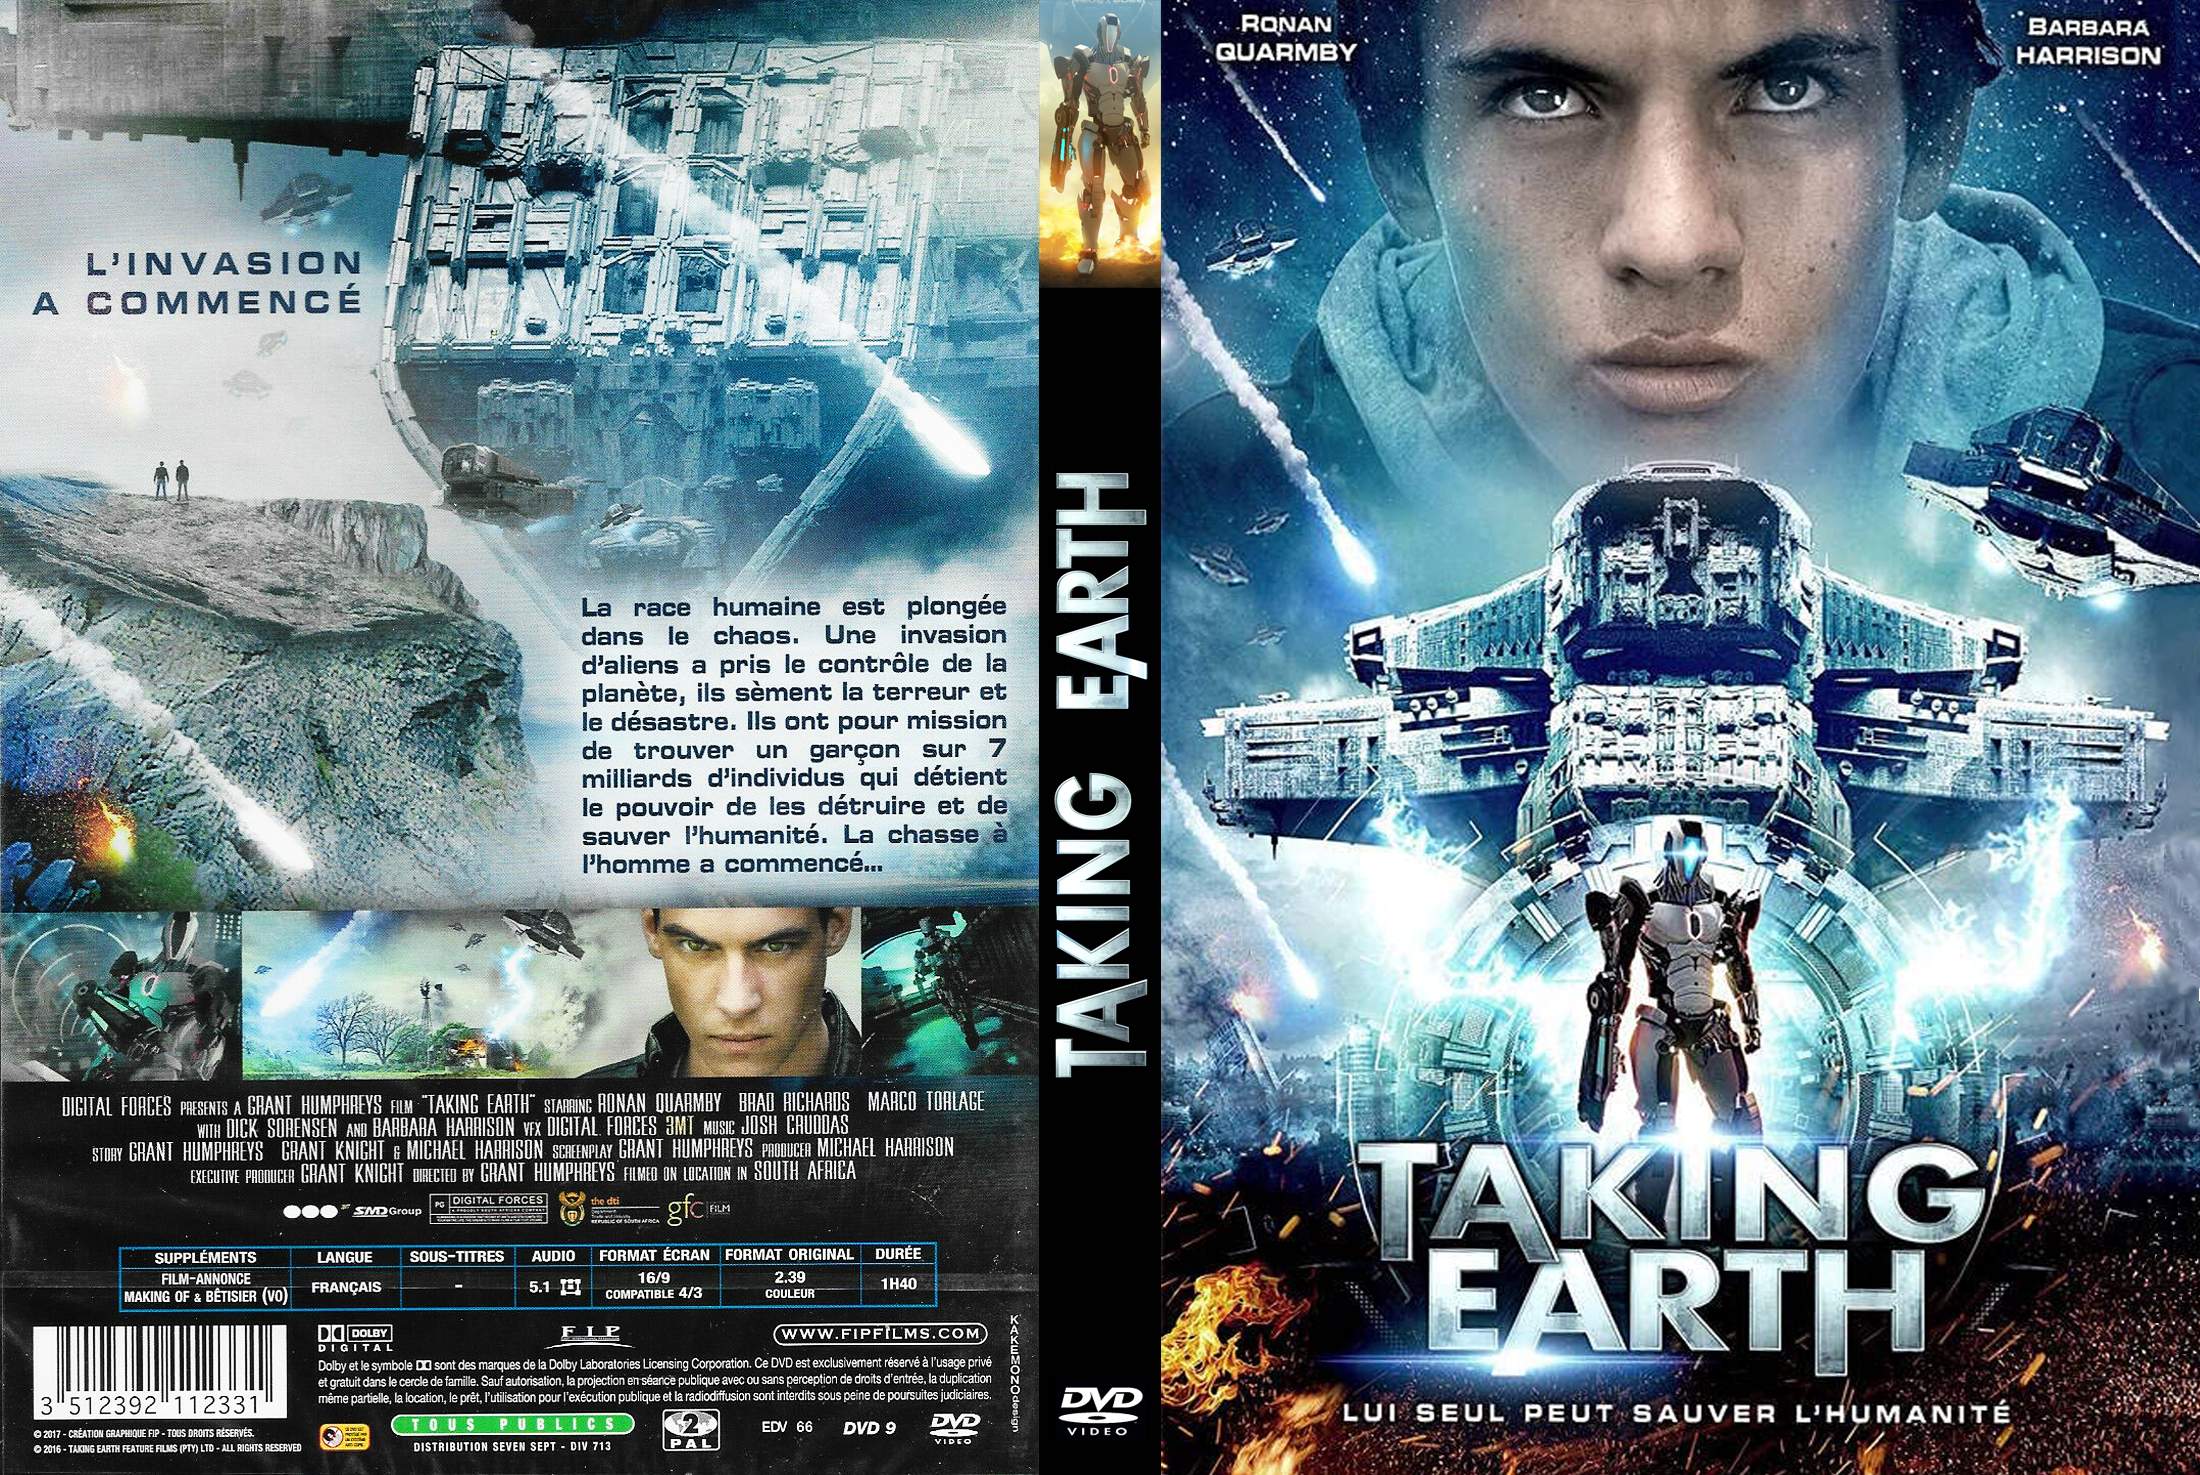 Jaquette DVD Taking earth custom